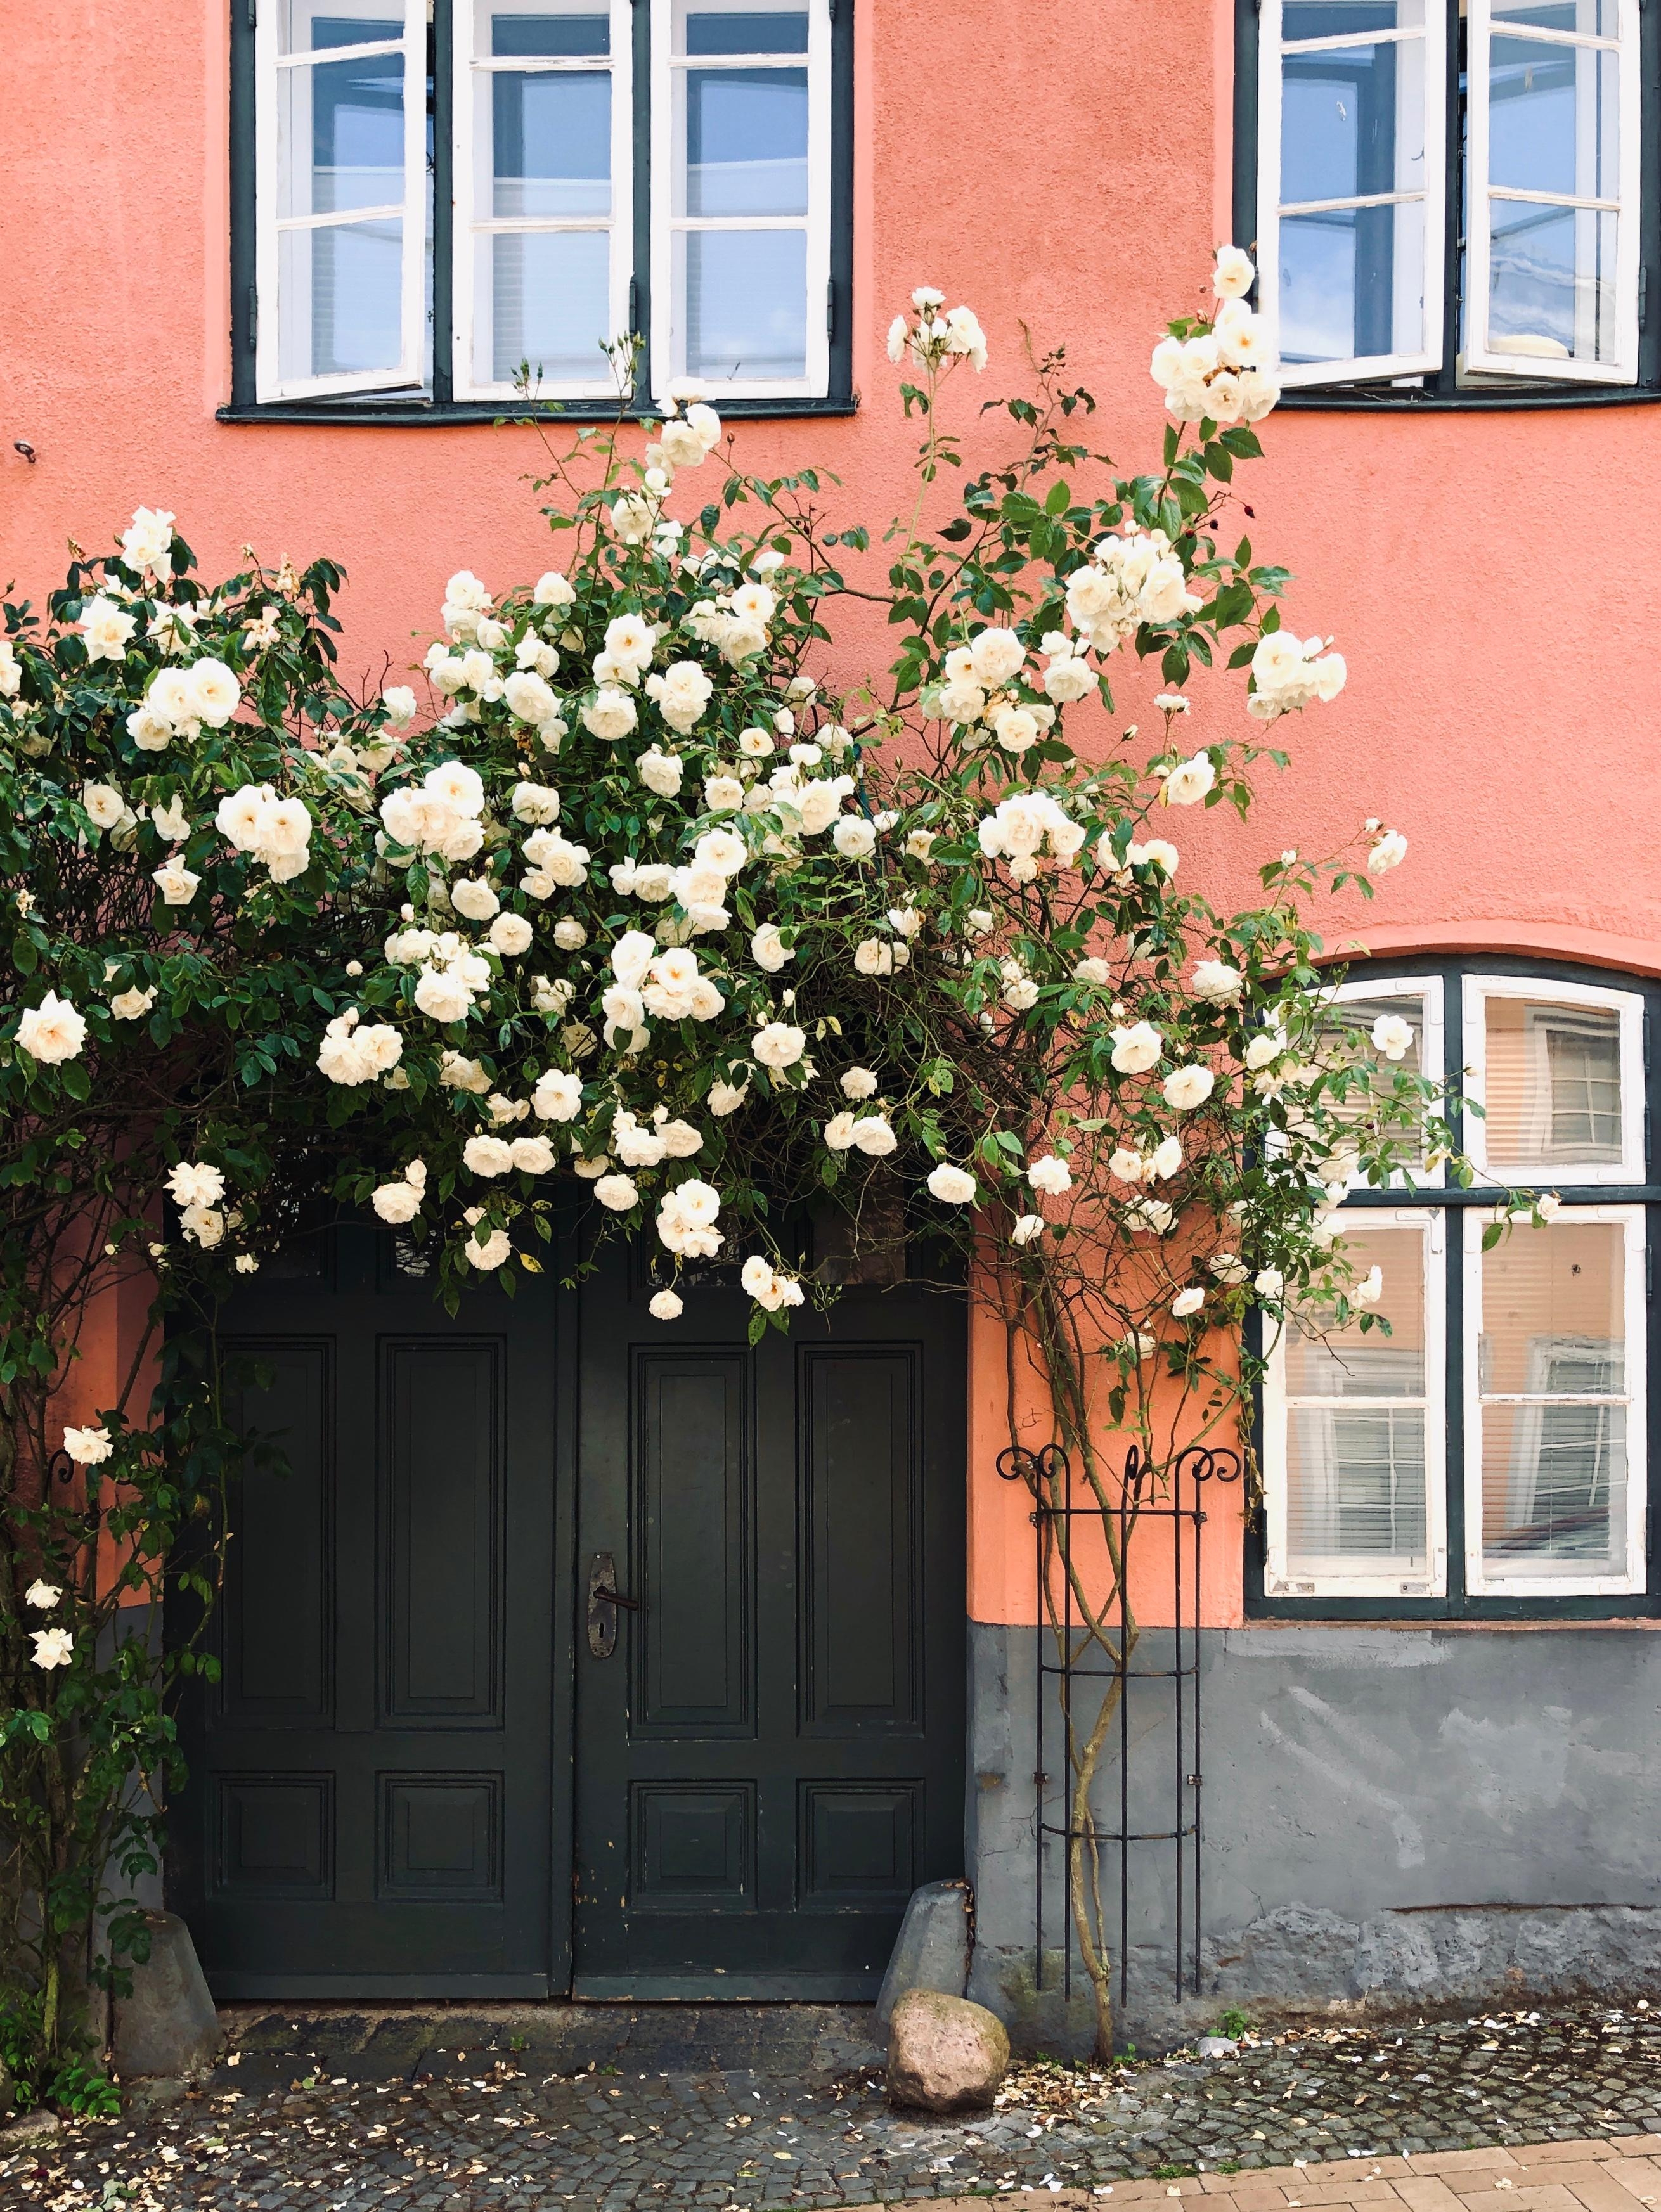 Summer blossom. 
#flowers #facades #streetphotography #home #flensburg